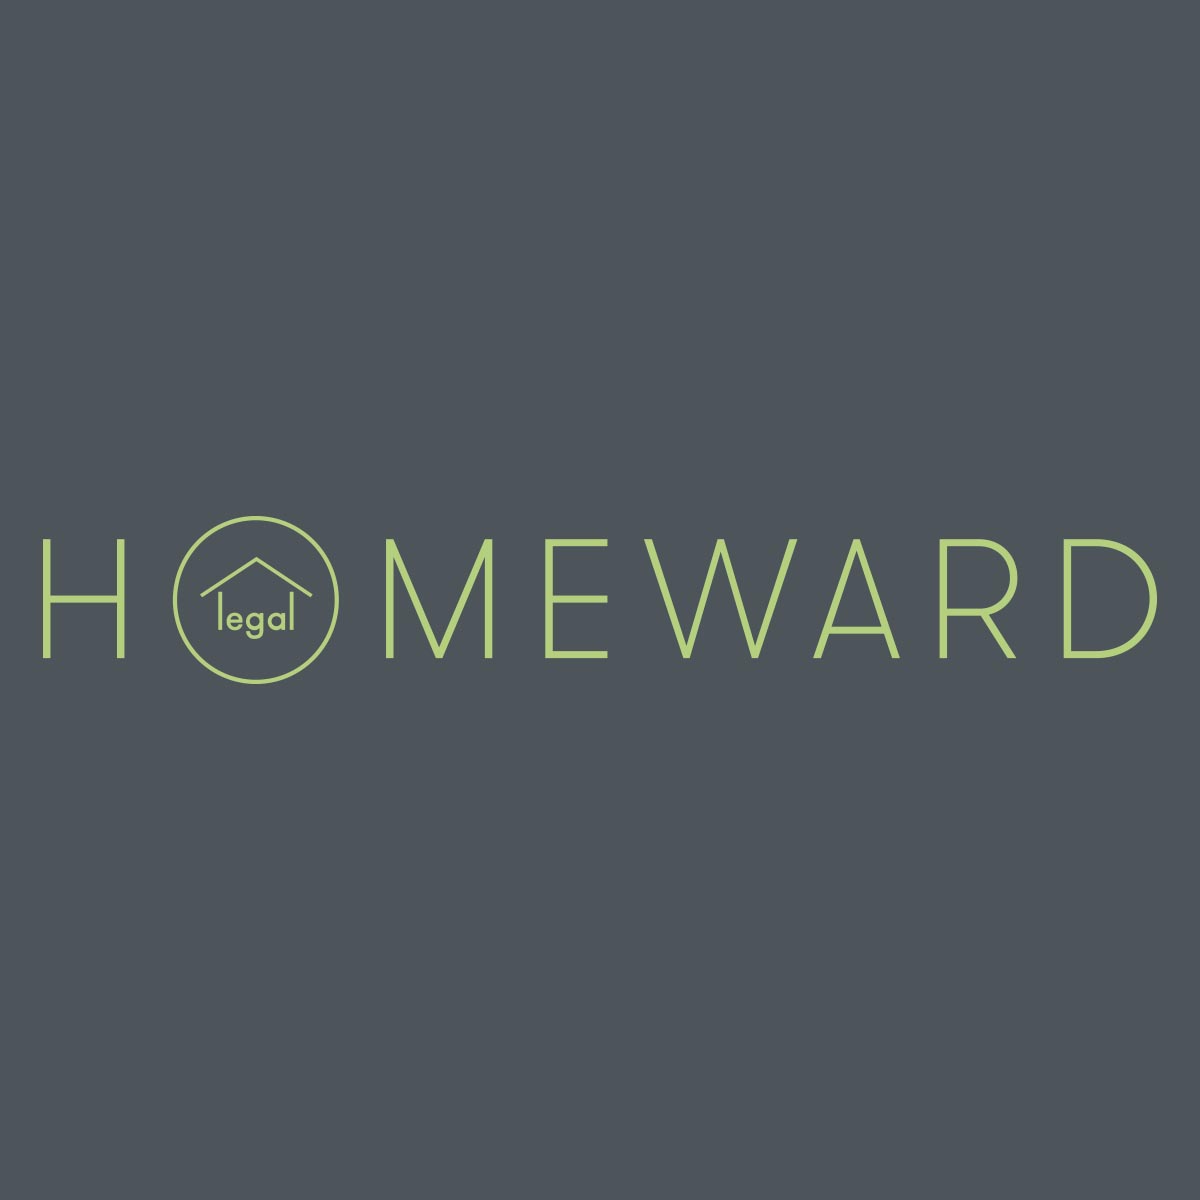 (c) Homewardlegal.co.uk